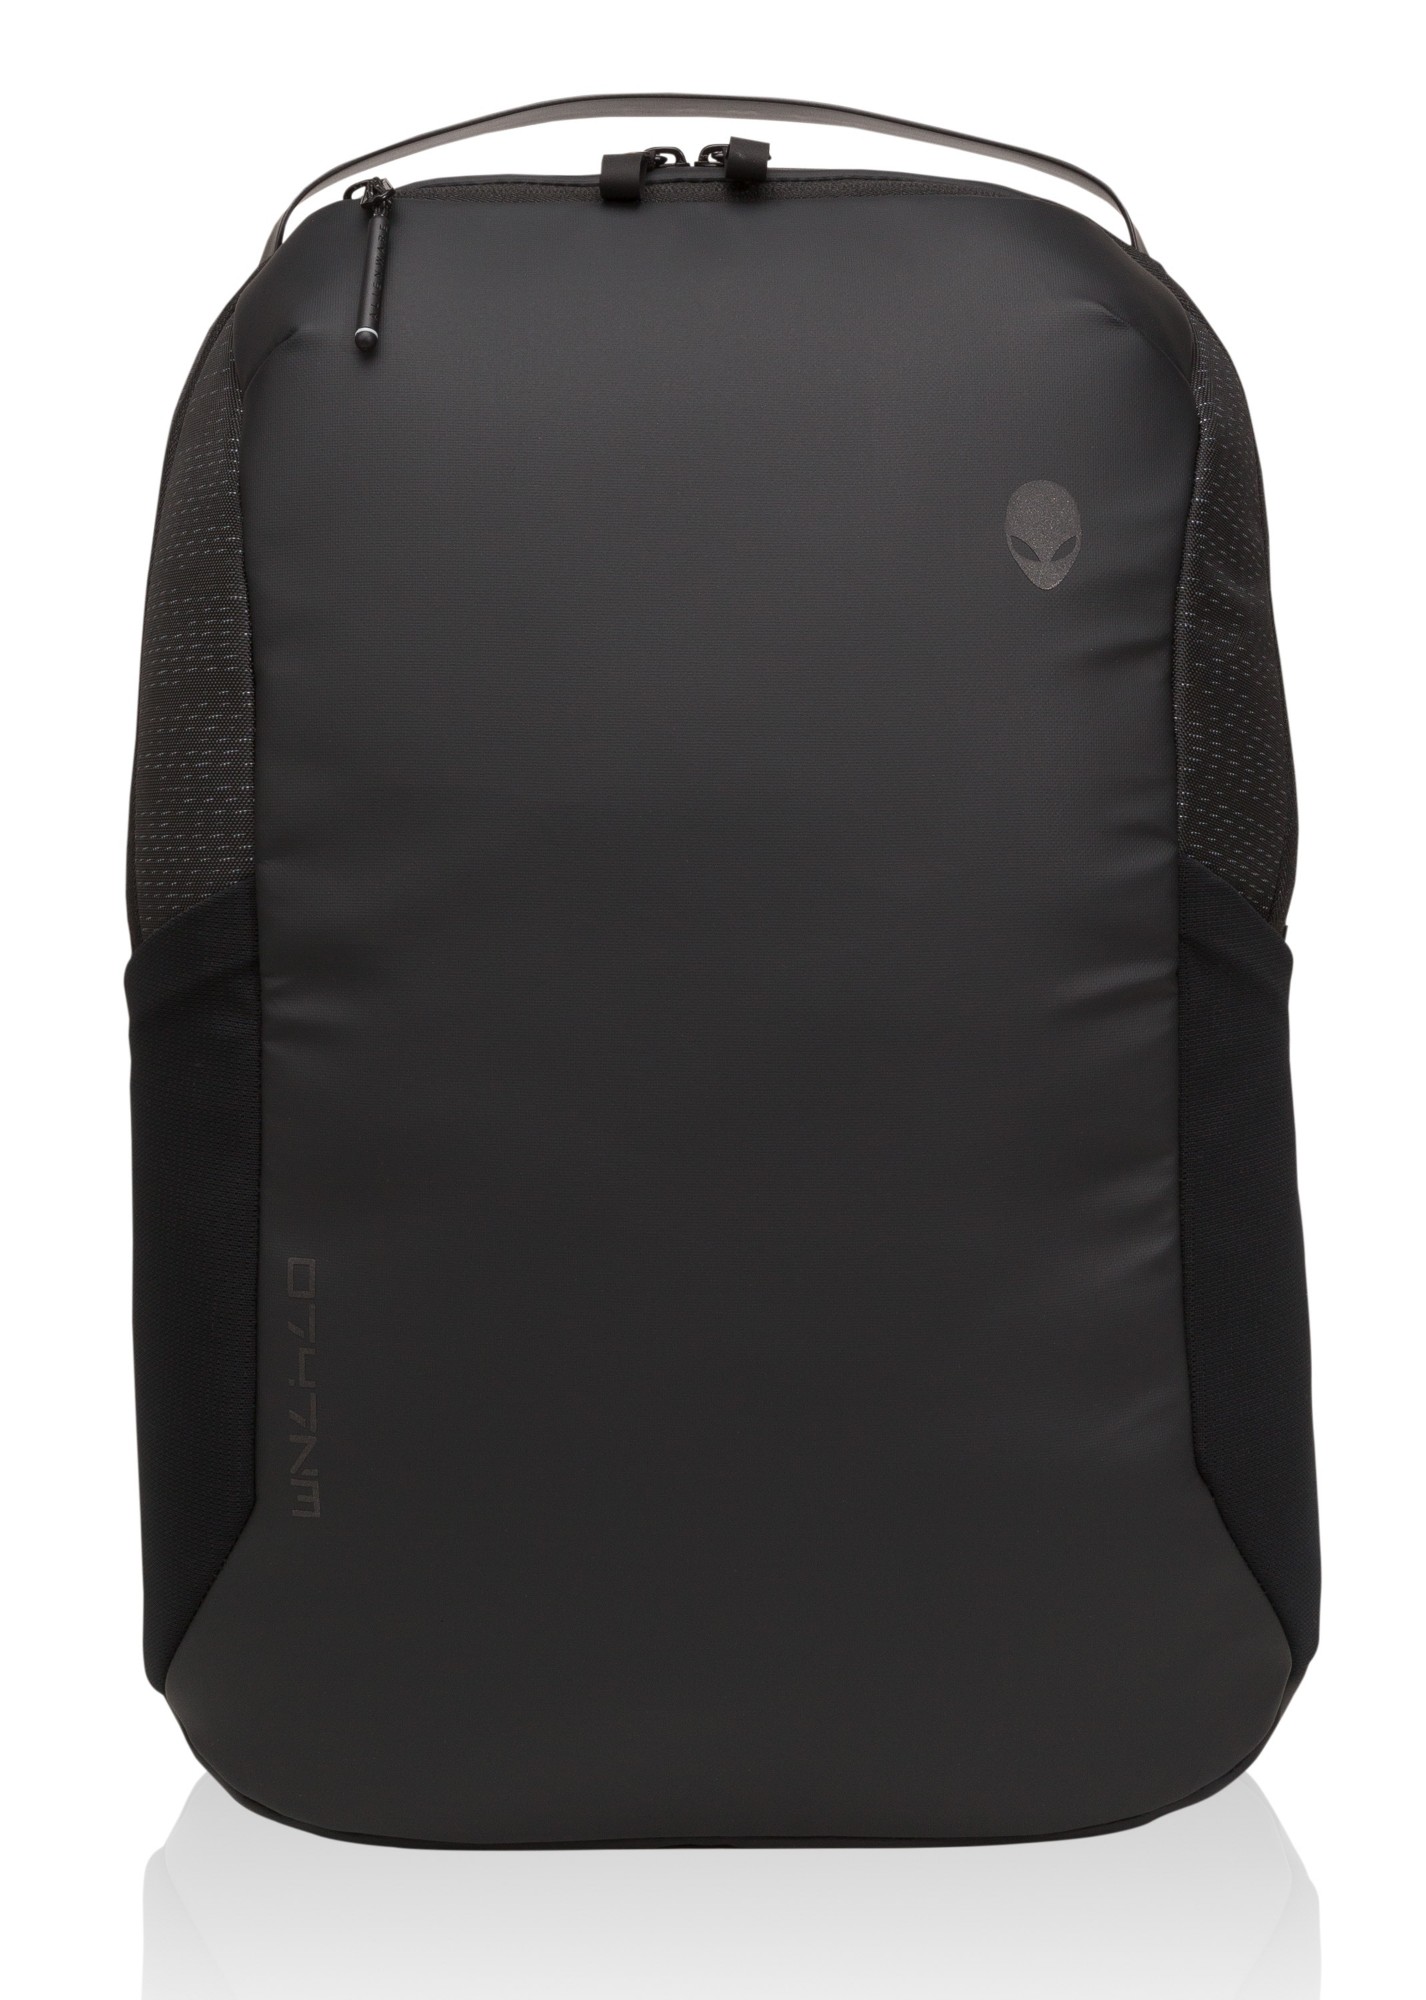 Alienware AW423P 17 backpack Casual backpack Black Ethylene-vinyl acetate (EVA) foam